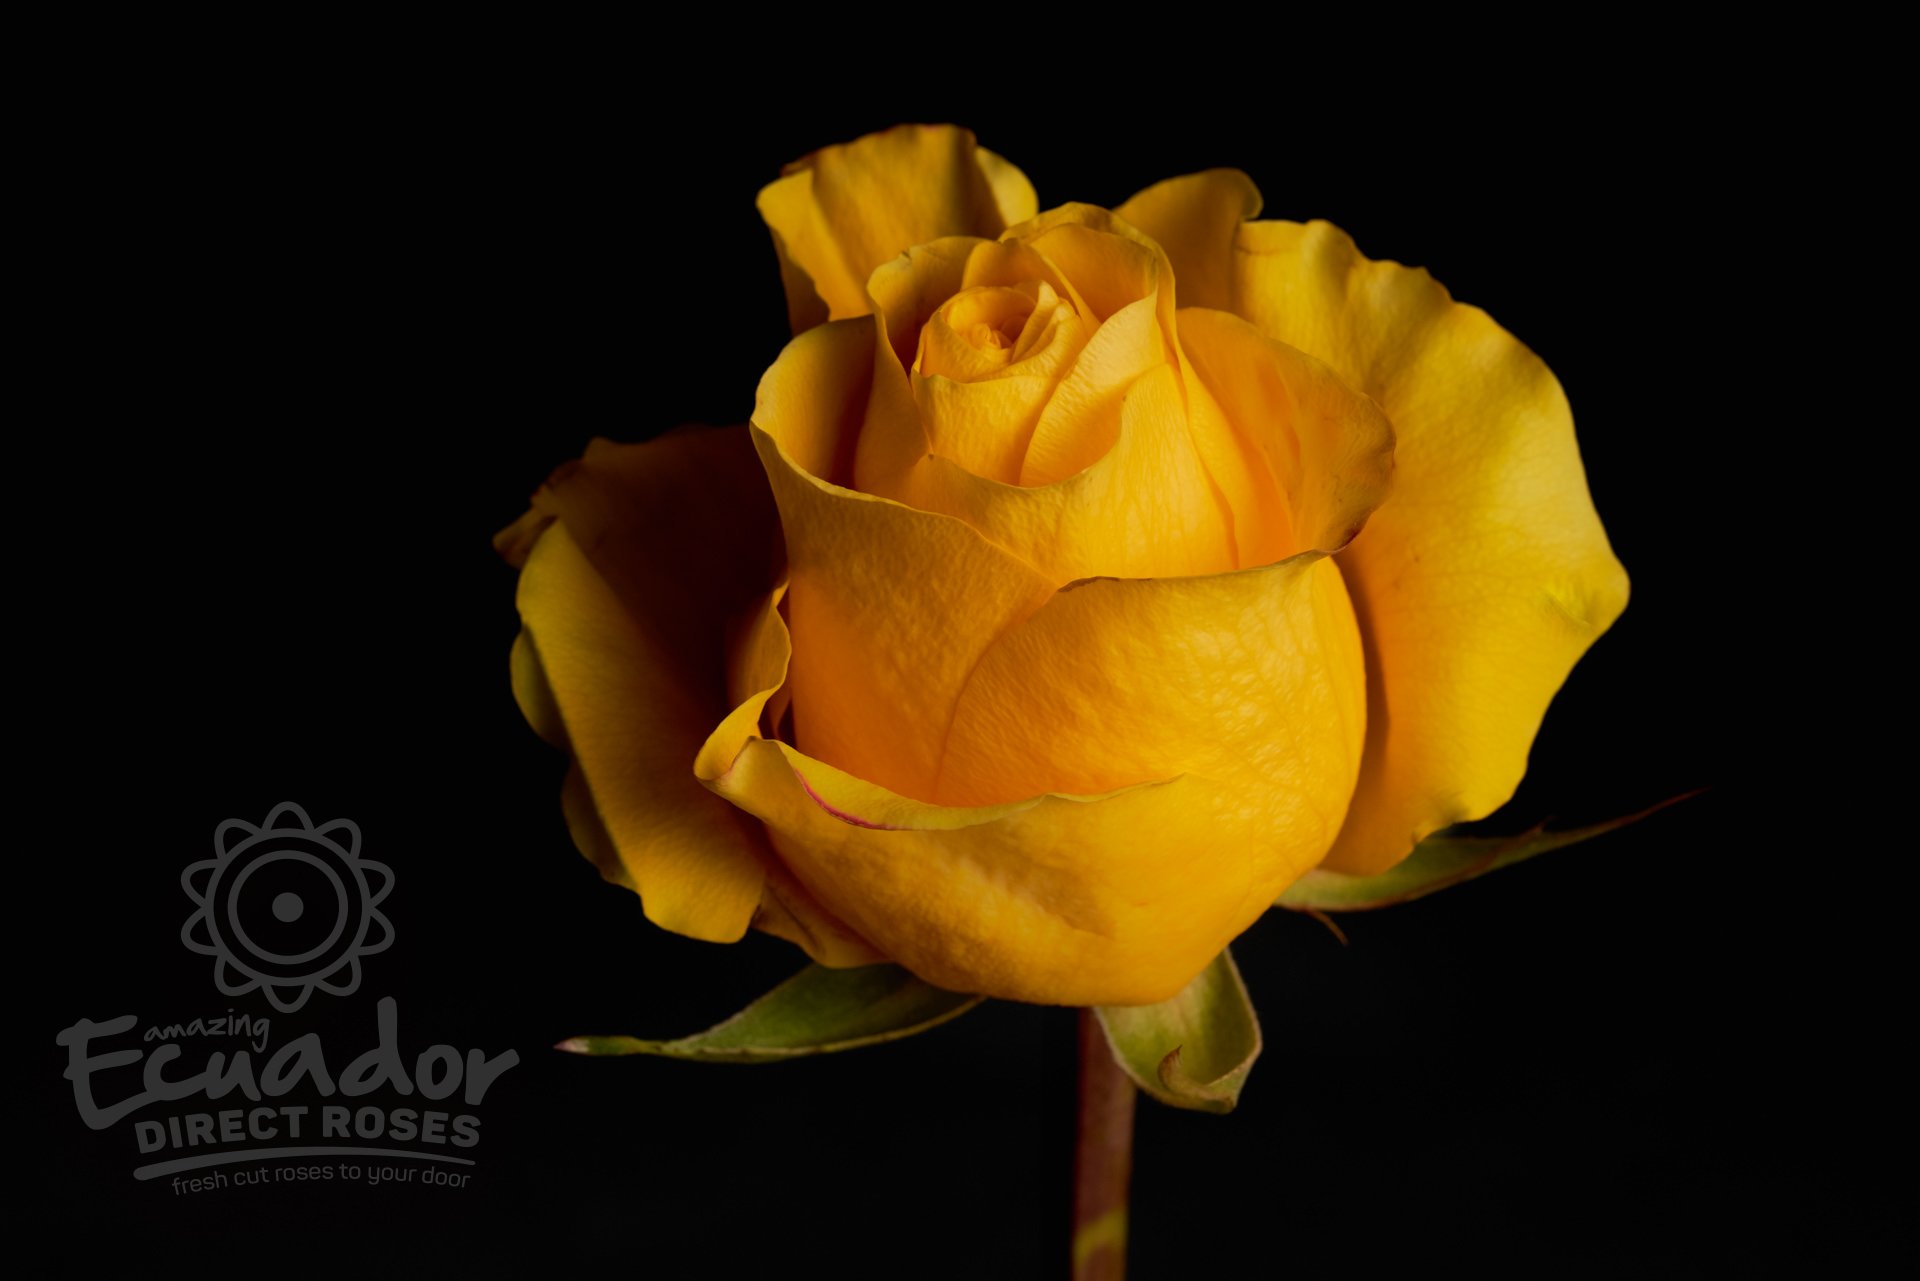 BRIGHTON - Yellow Rose | Ecuador Direct Roses